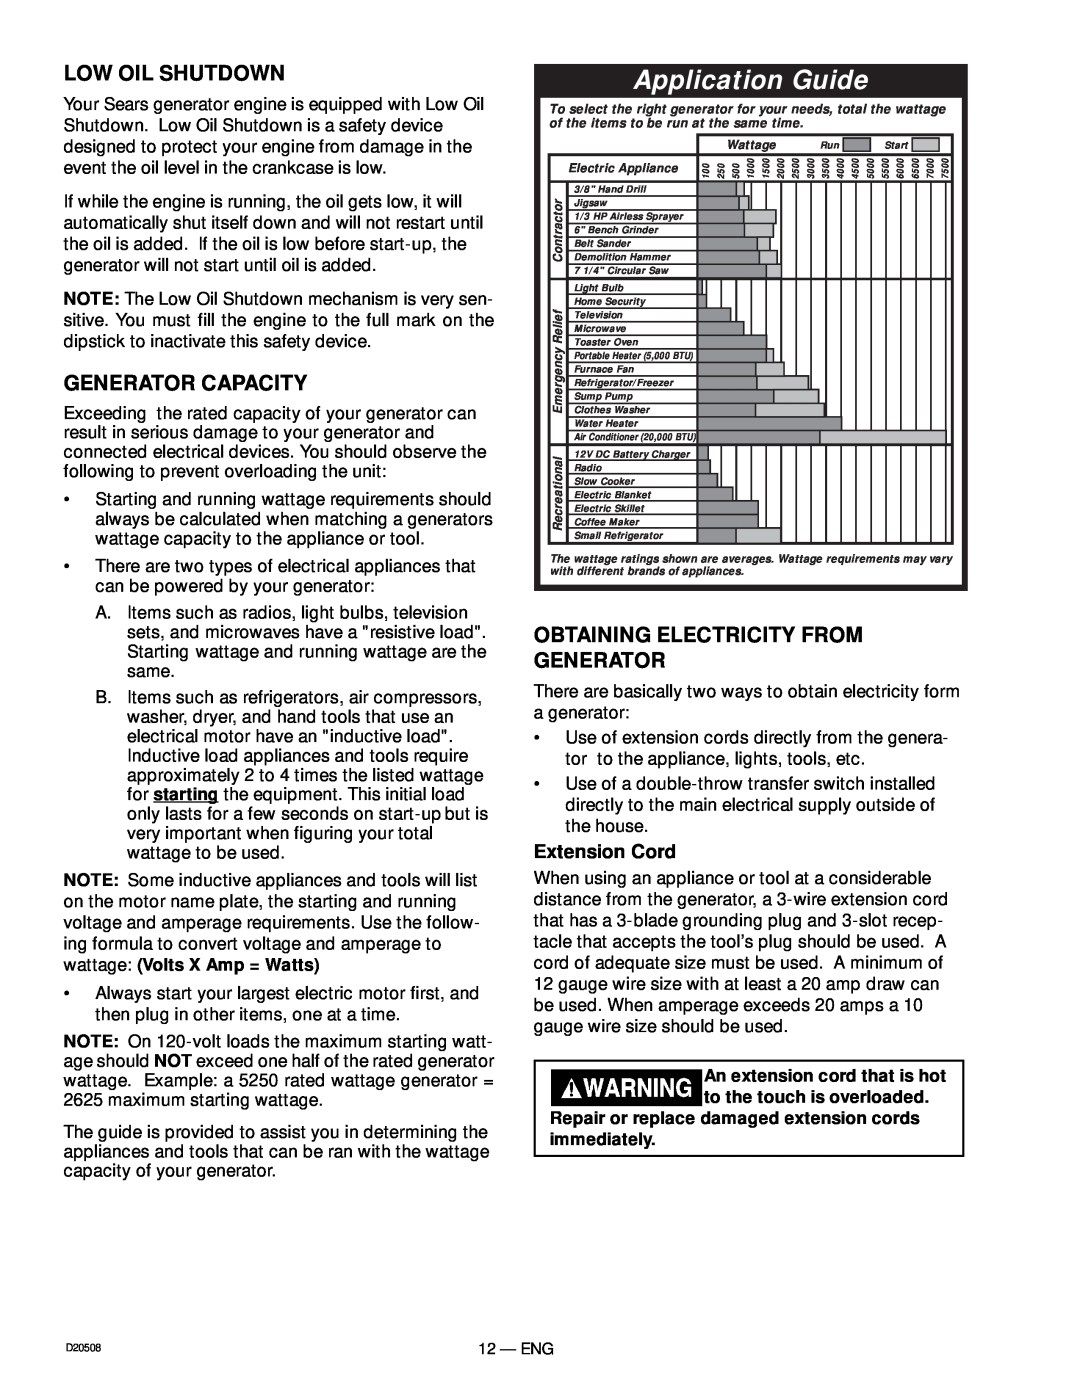 Sears D20508, 919.329110 owner manual Low Oil Shutdown, Generator Capacity, Extension Cord, Application Guide 